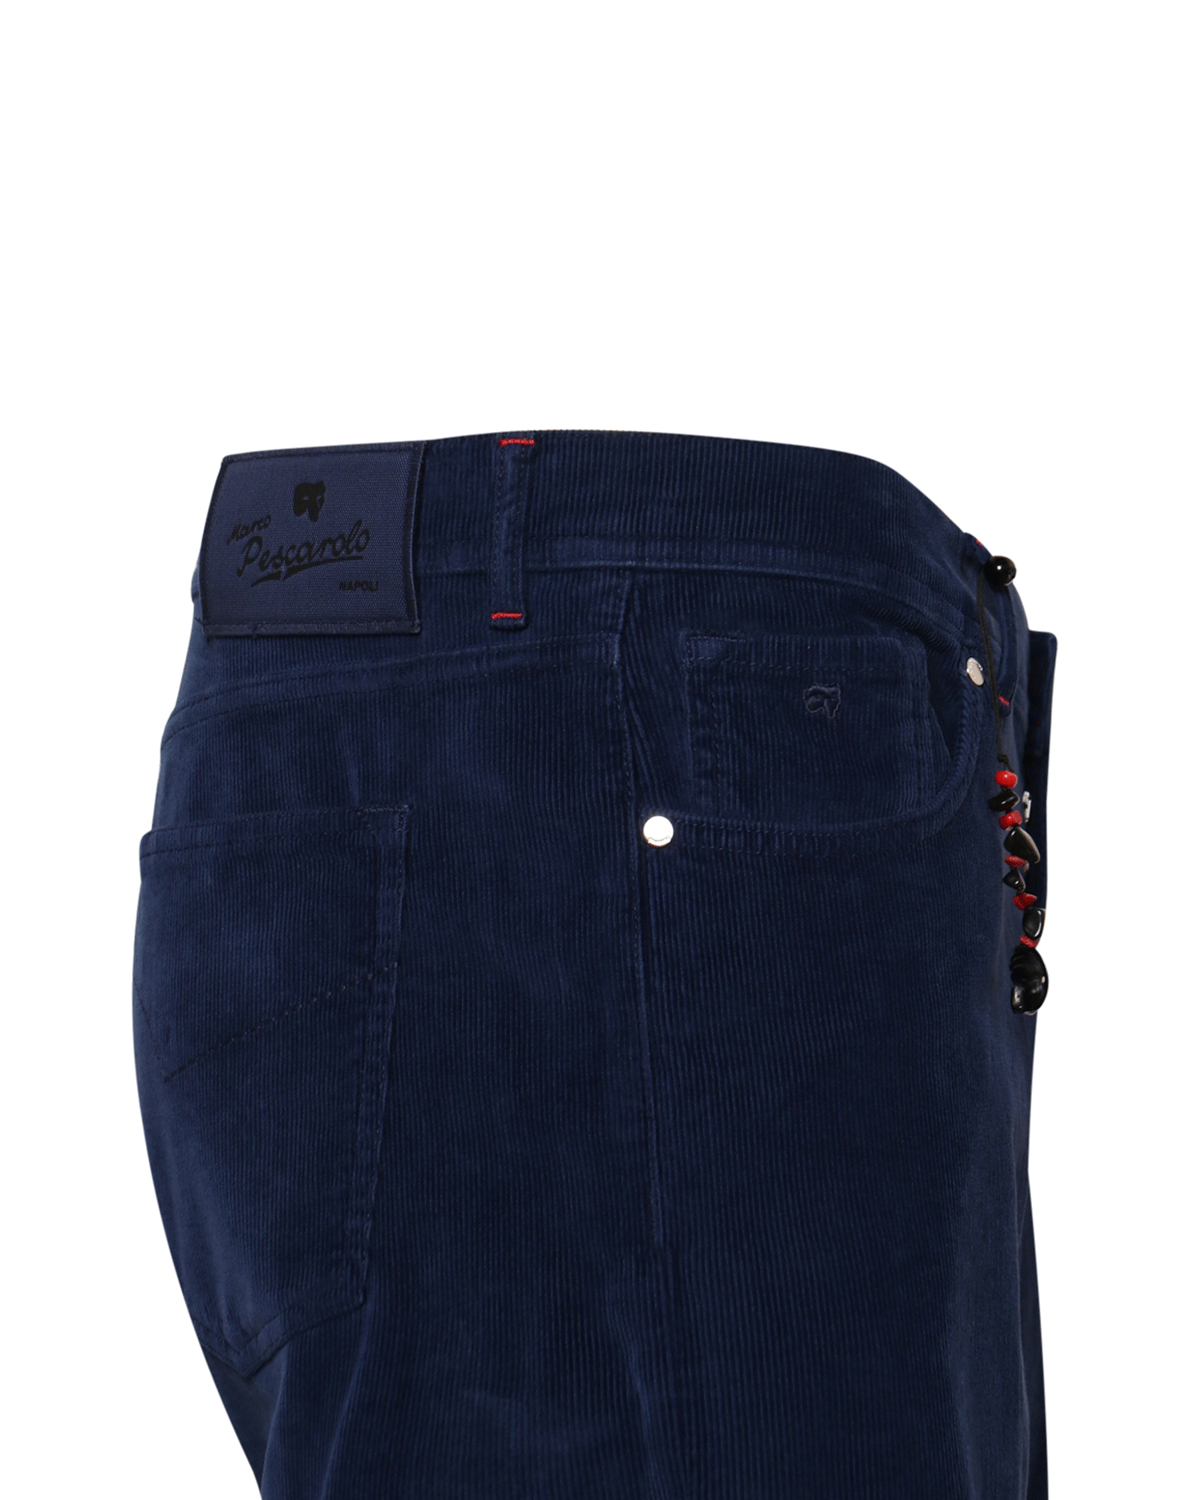 Royal Blue Pinwale Corduroy 5 Pocket Pant